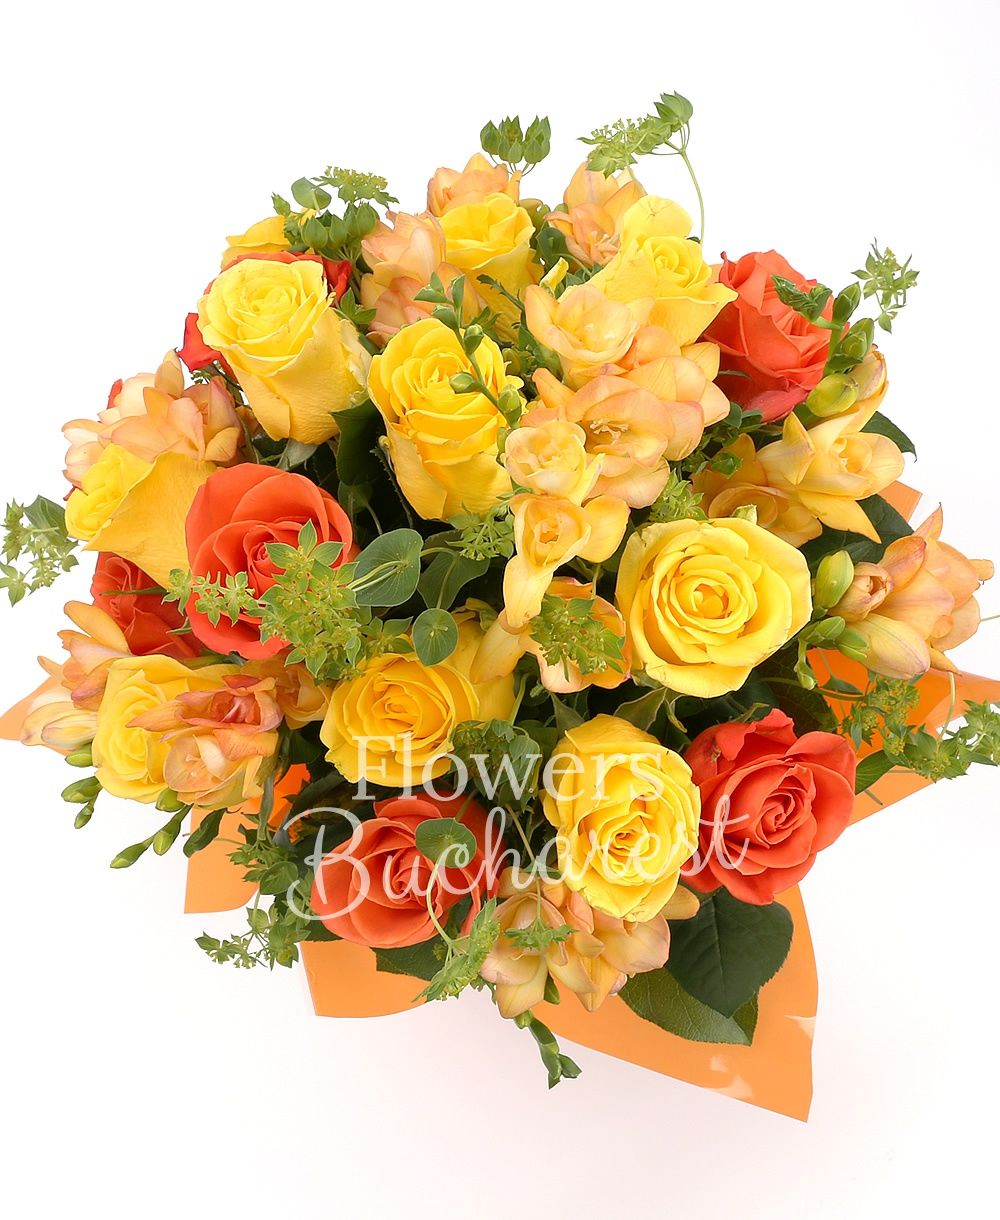 10 yellow roses, 7 orange roses, 10 yellow freesias, greenery